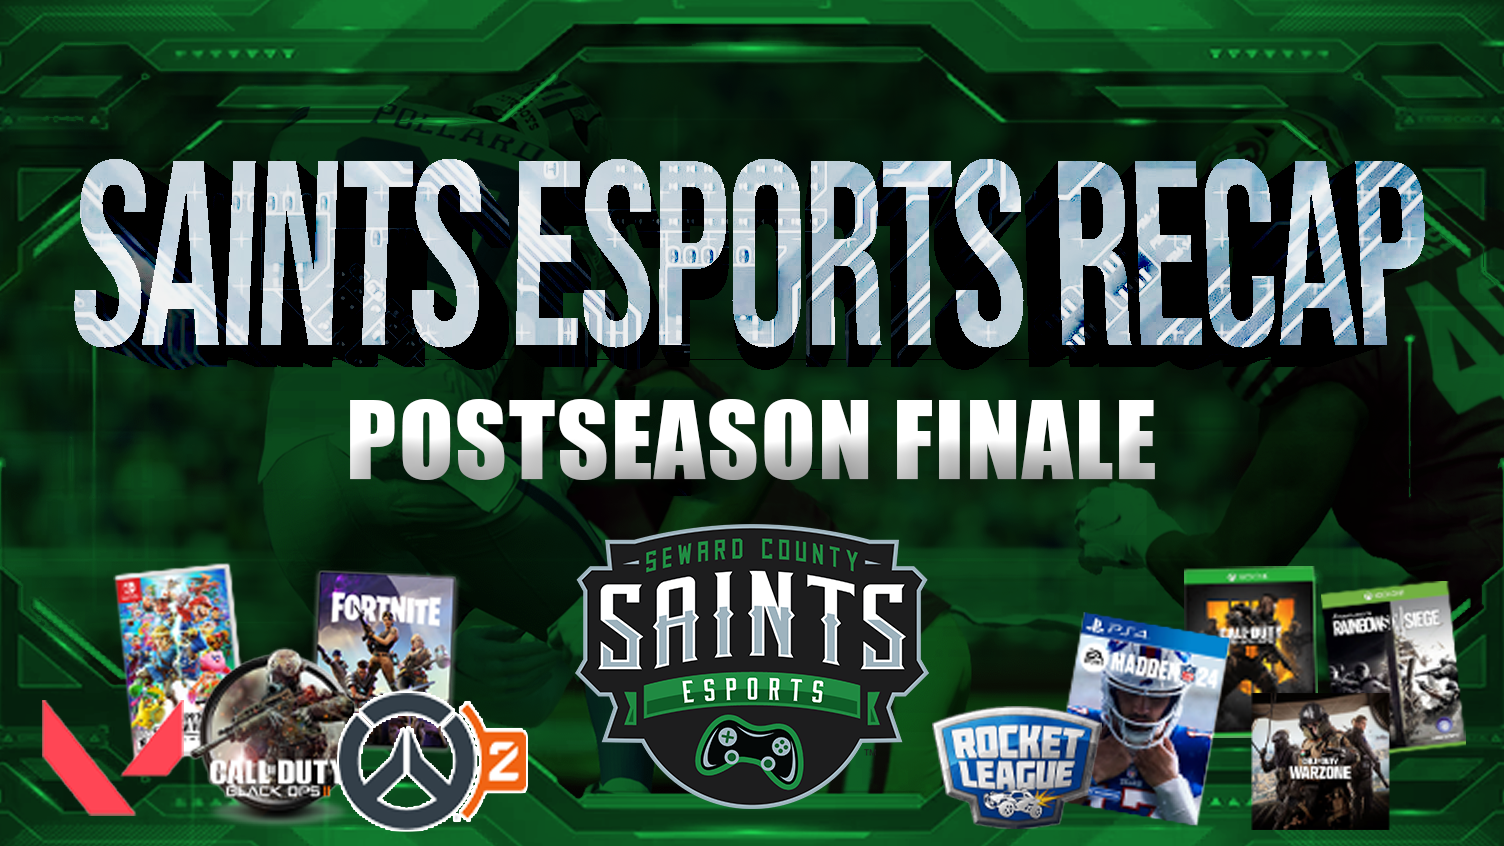 Saints Esports Post-Season Final